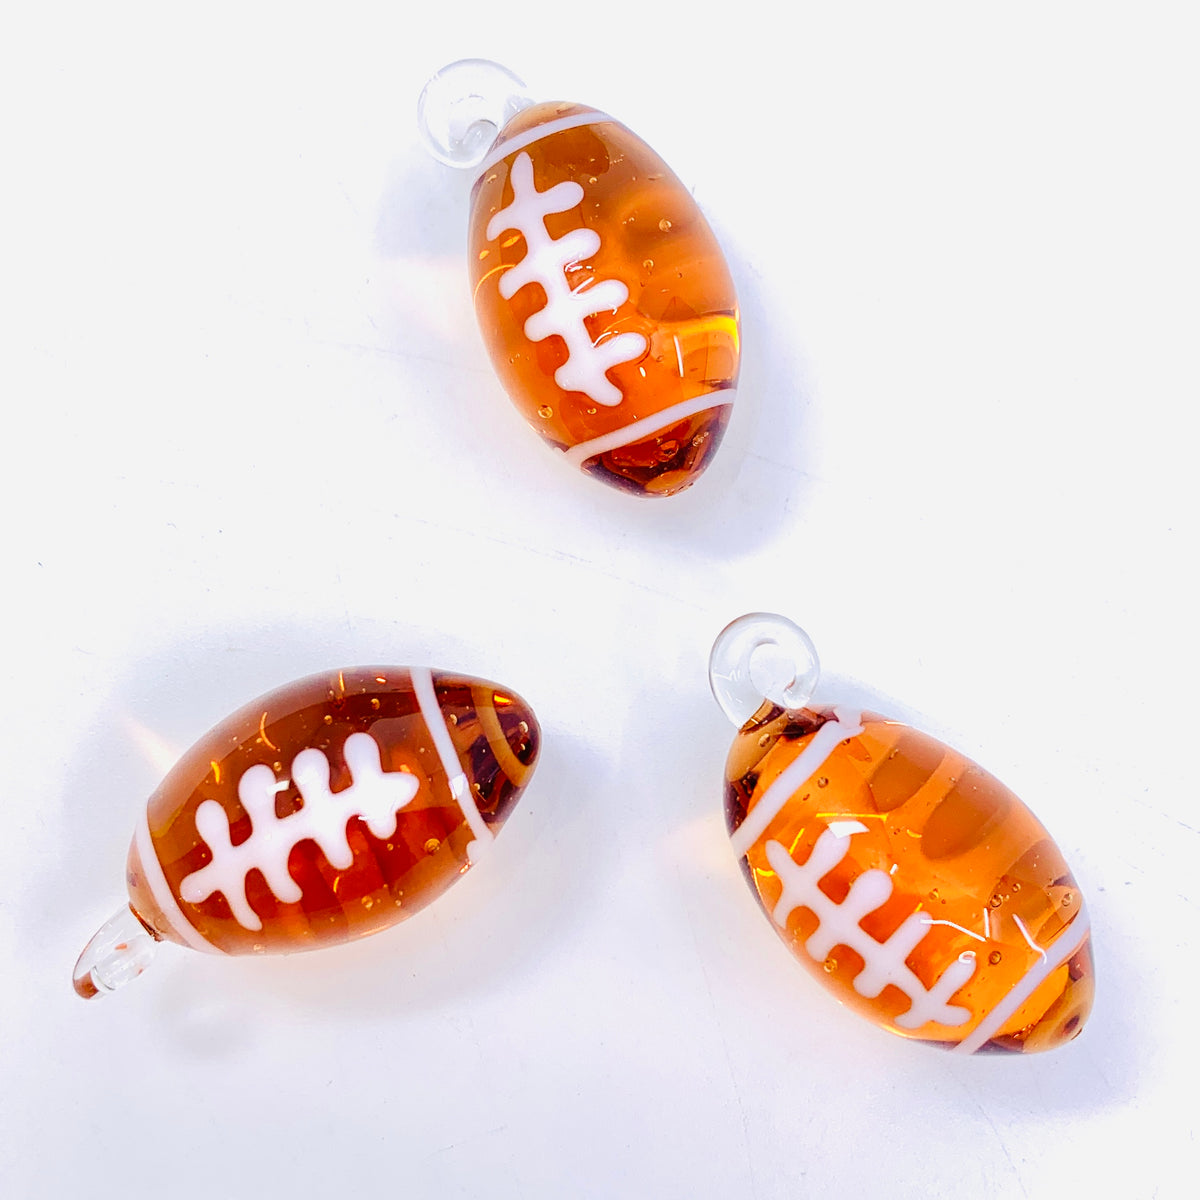 Tiny Glass Football Ornament 357